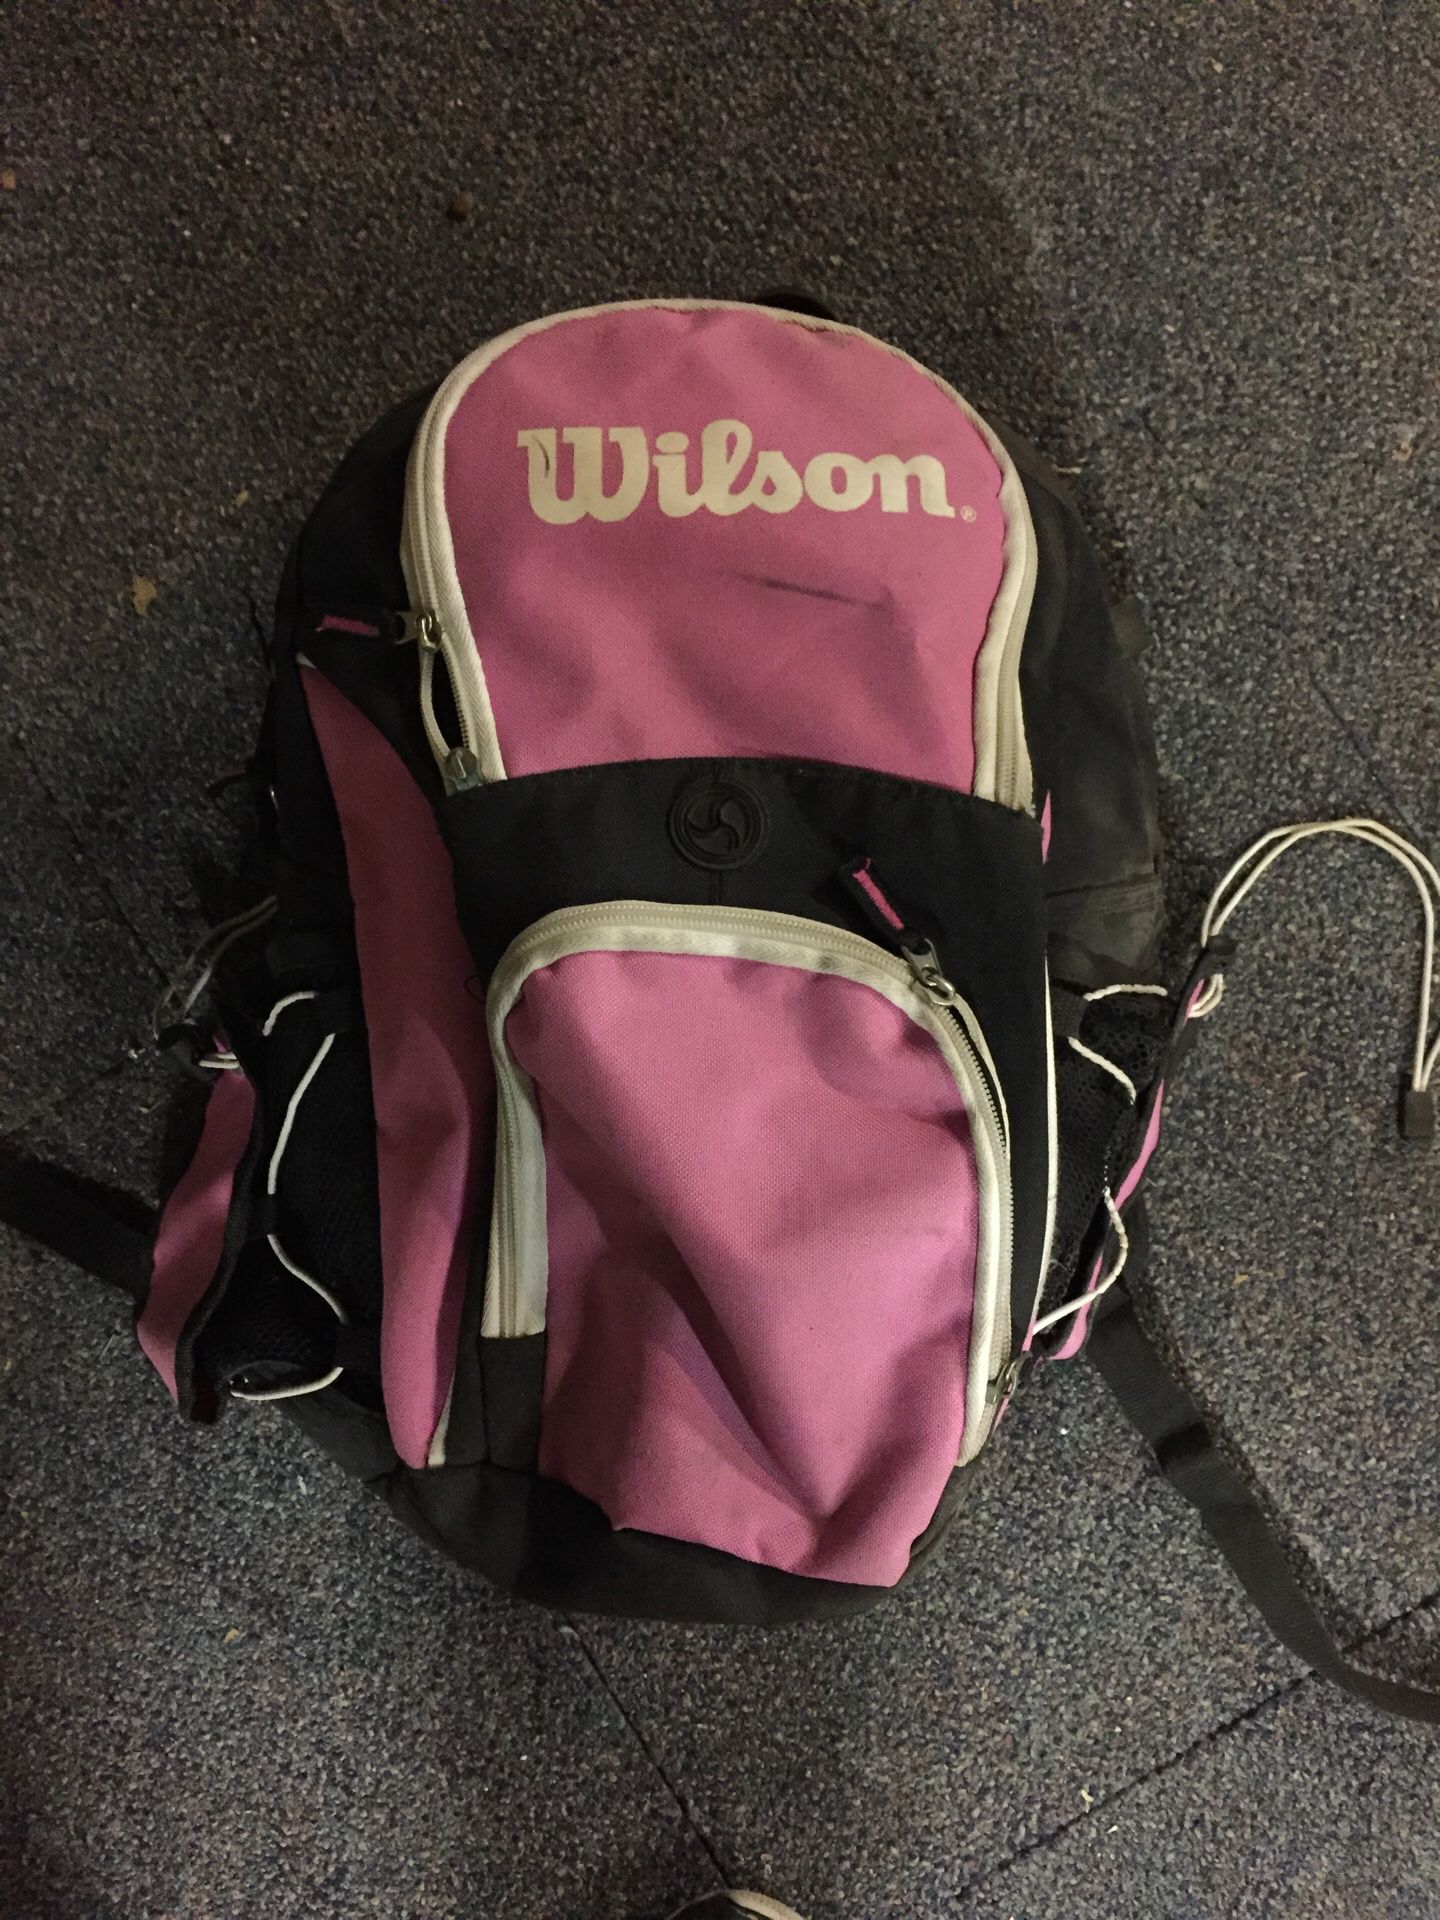 Wilson backpack